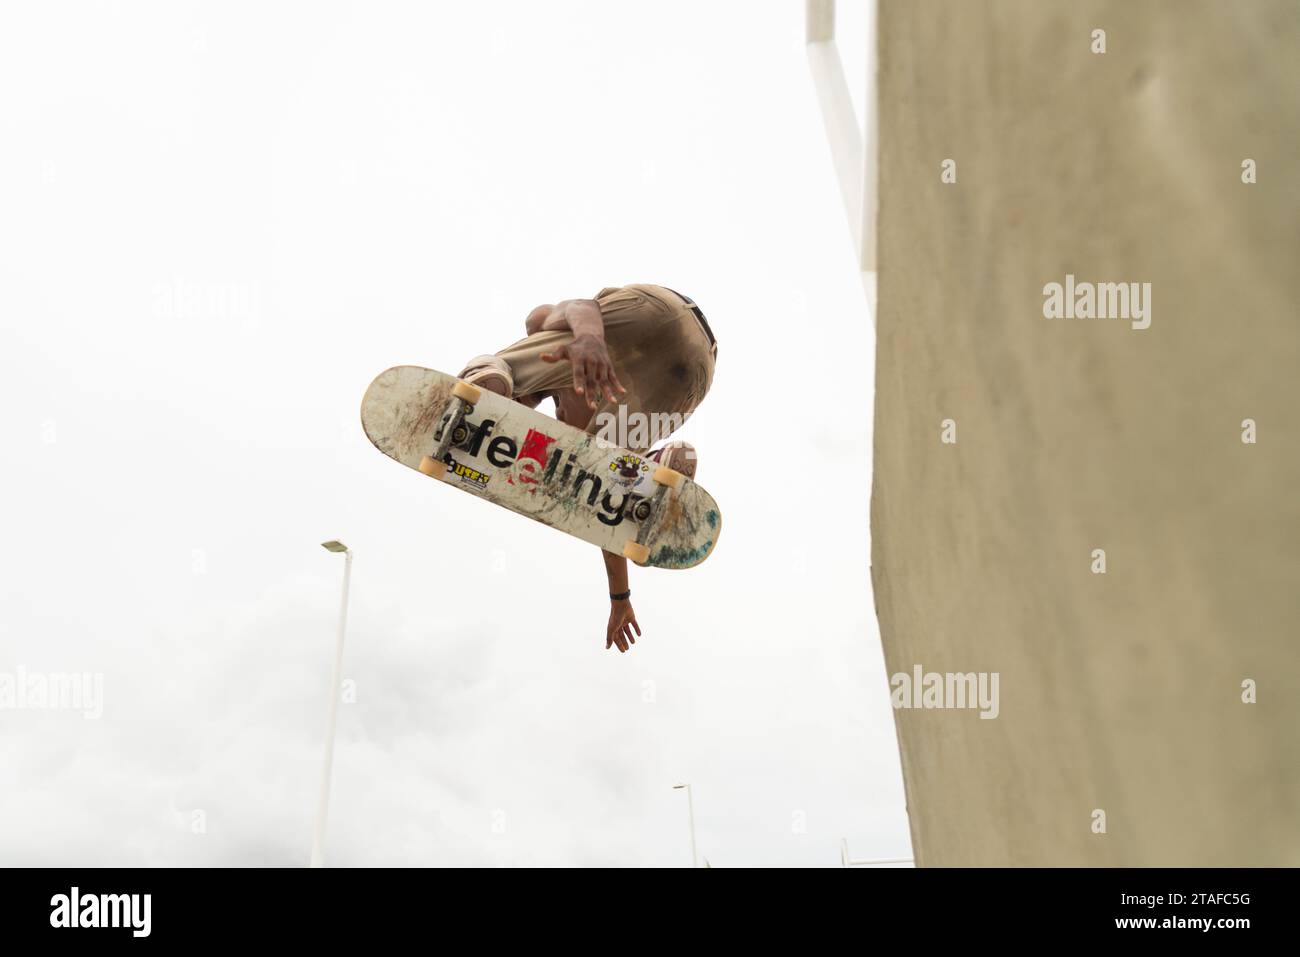 Salvador, Bahia, Brasilien - 14. März 2020: Skateboarder macht Tricks im Parque dos Ventos in Salvador, Bahia. Stockfoto